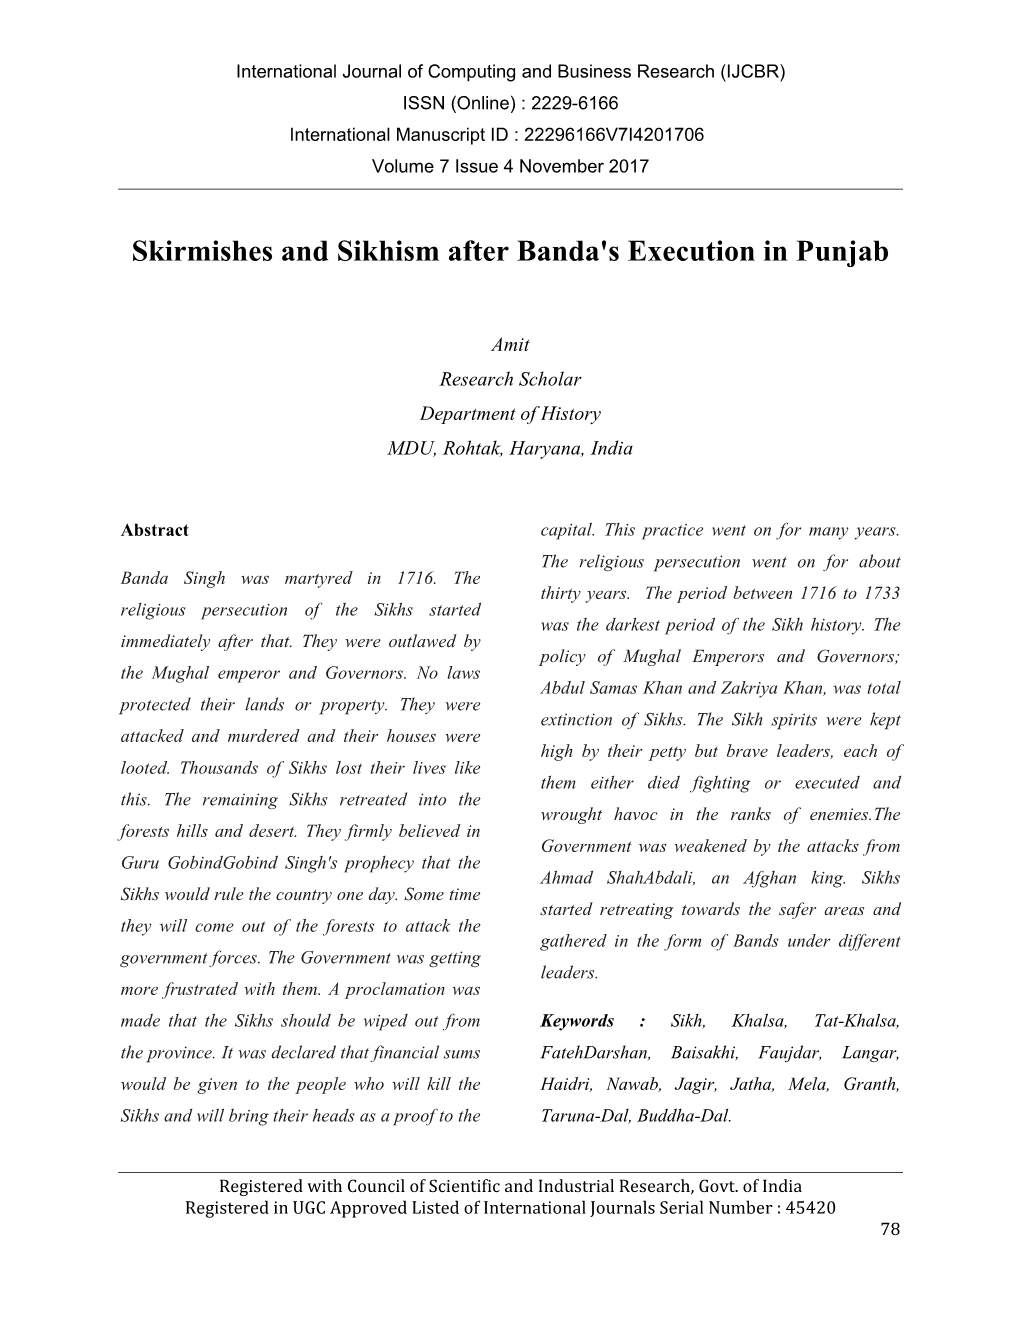 Skirmishes and Sikhism After Banda's Execution in Punjab